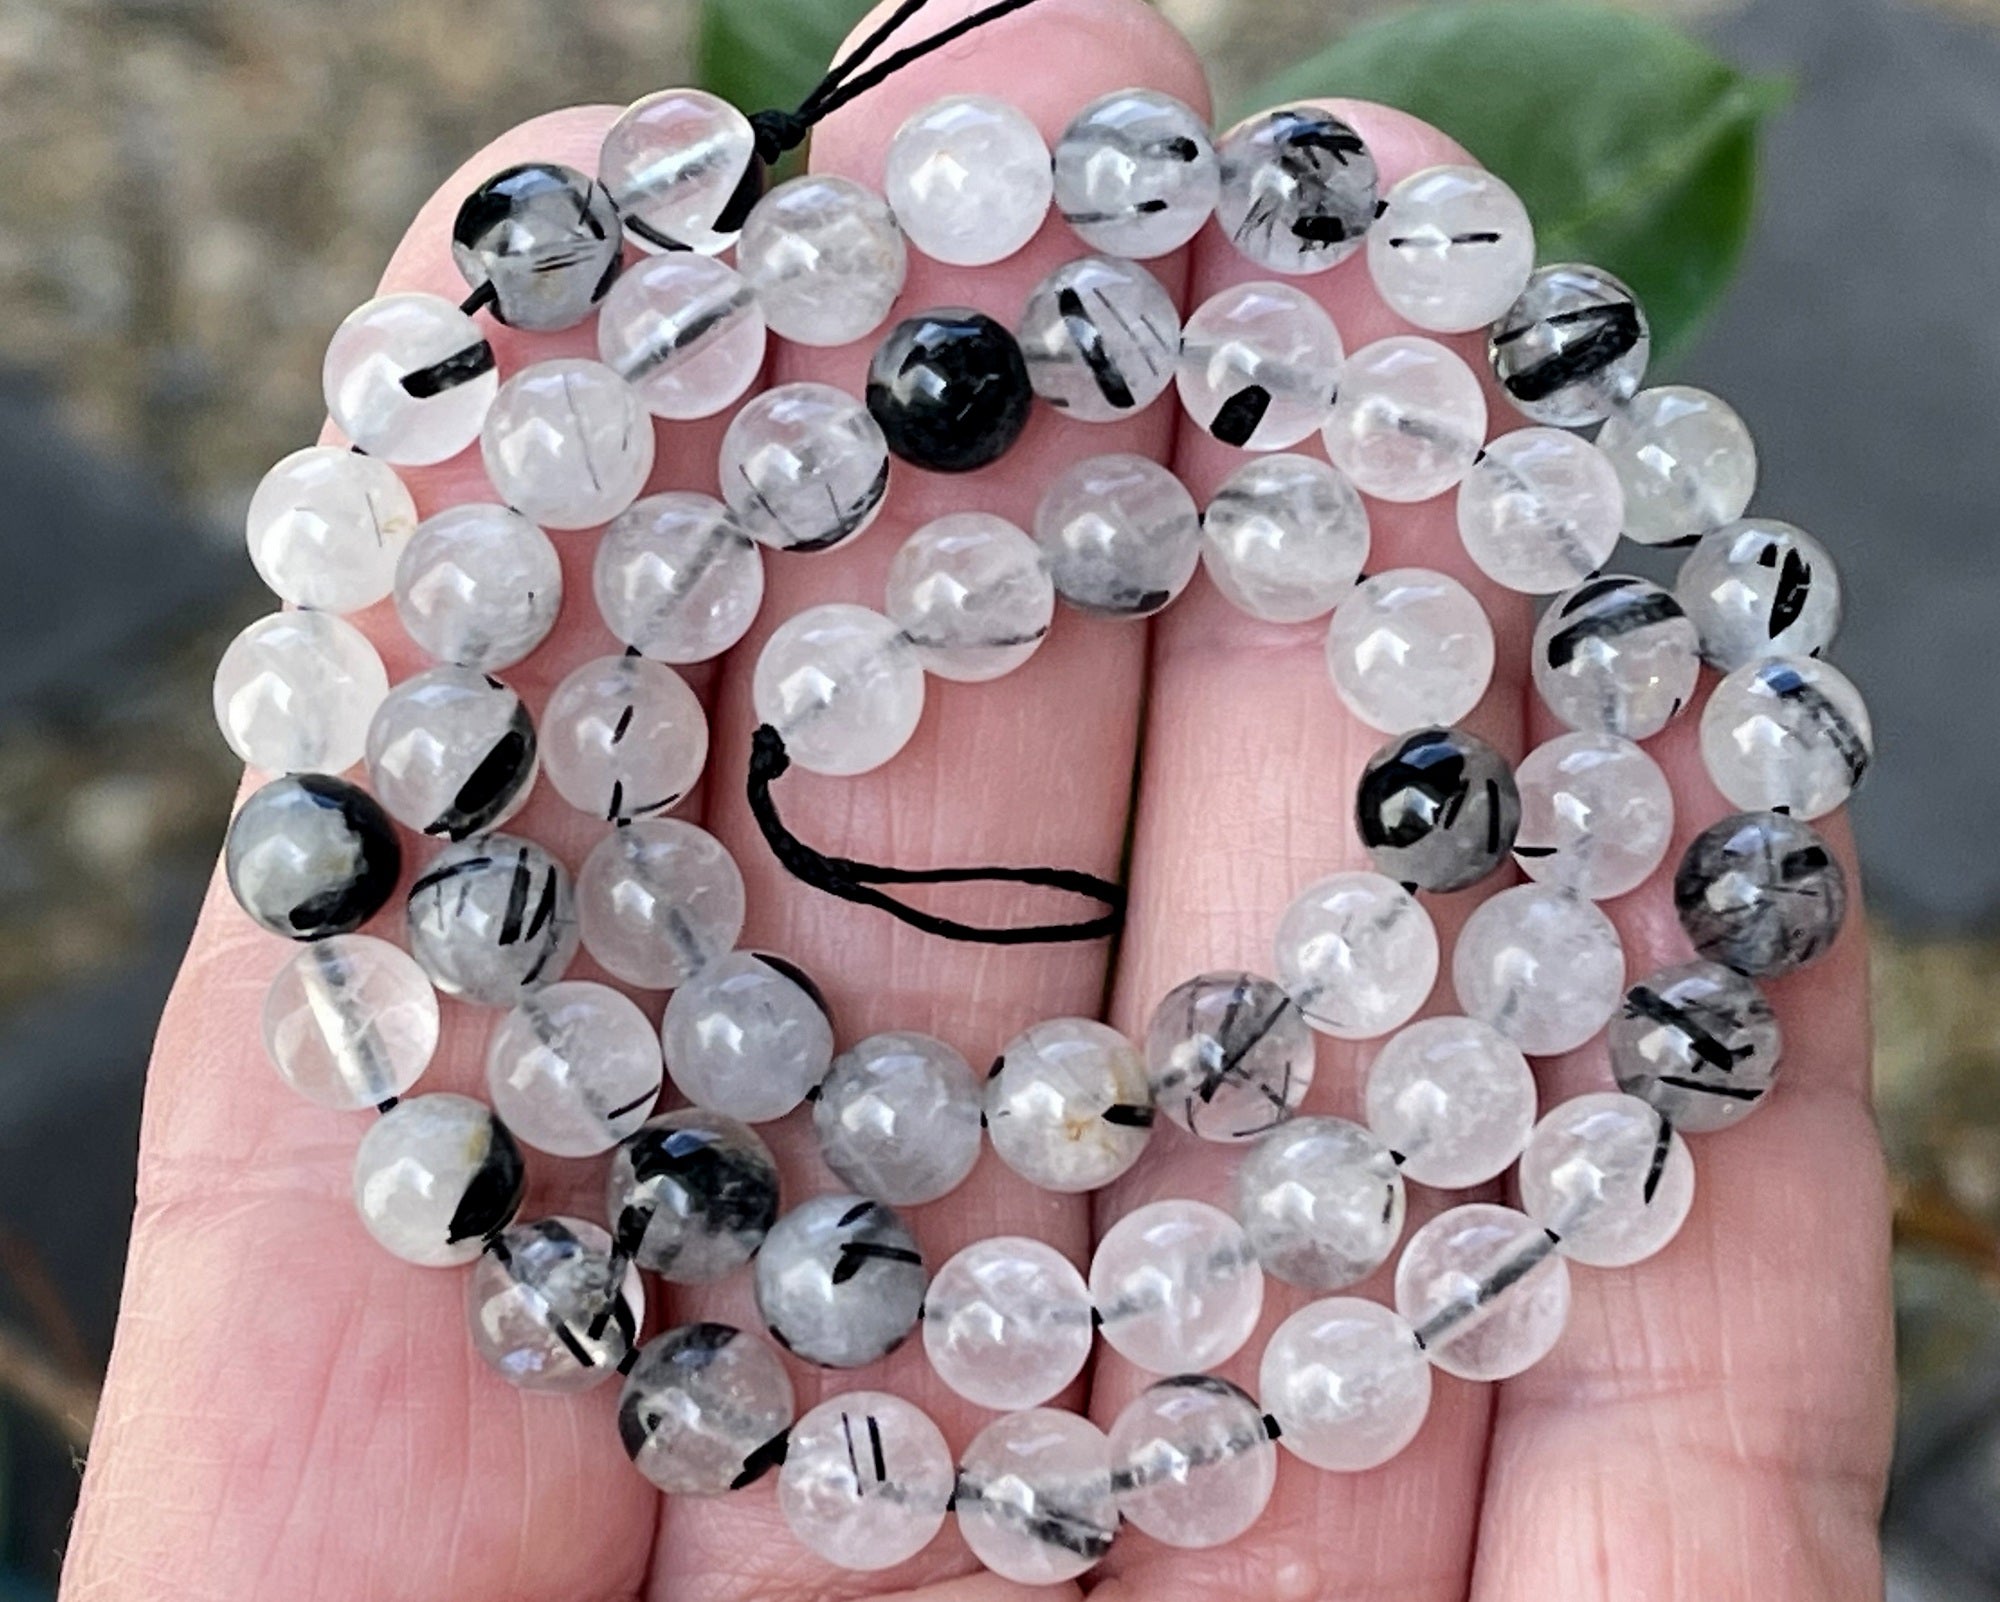 Black Tourmaline Rutilated Quartz 6mm round natural gemstone beads 15.5" strand - Oz Beads 